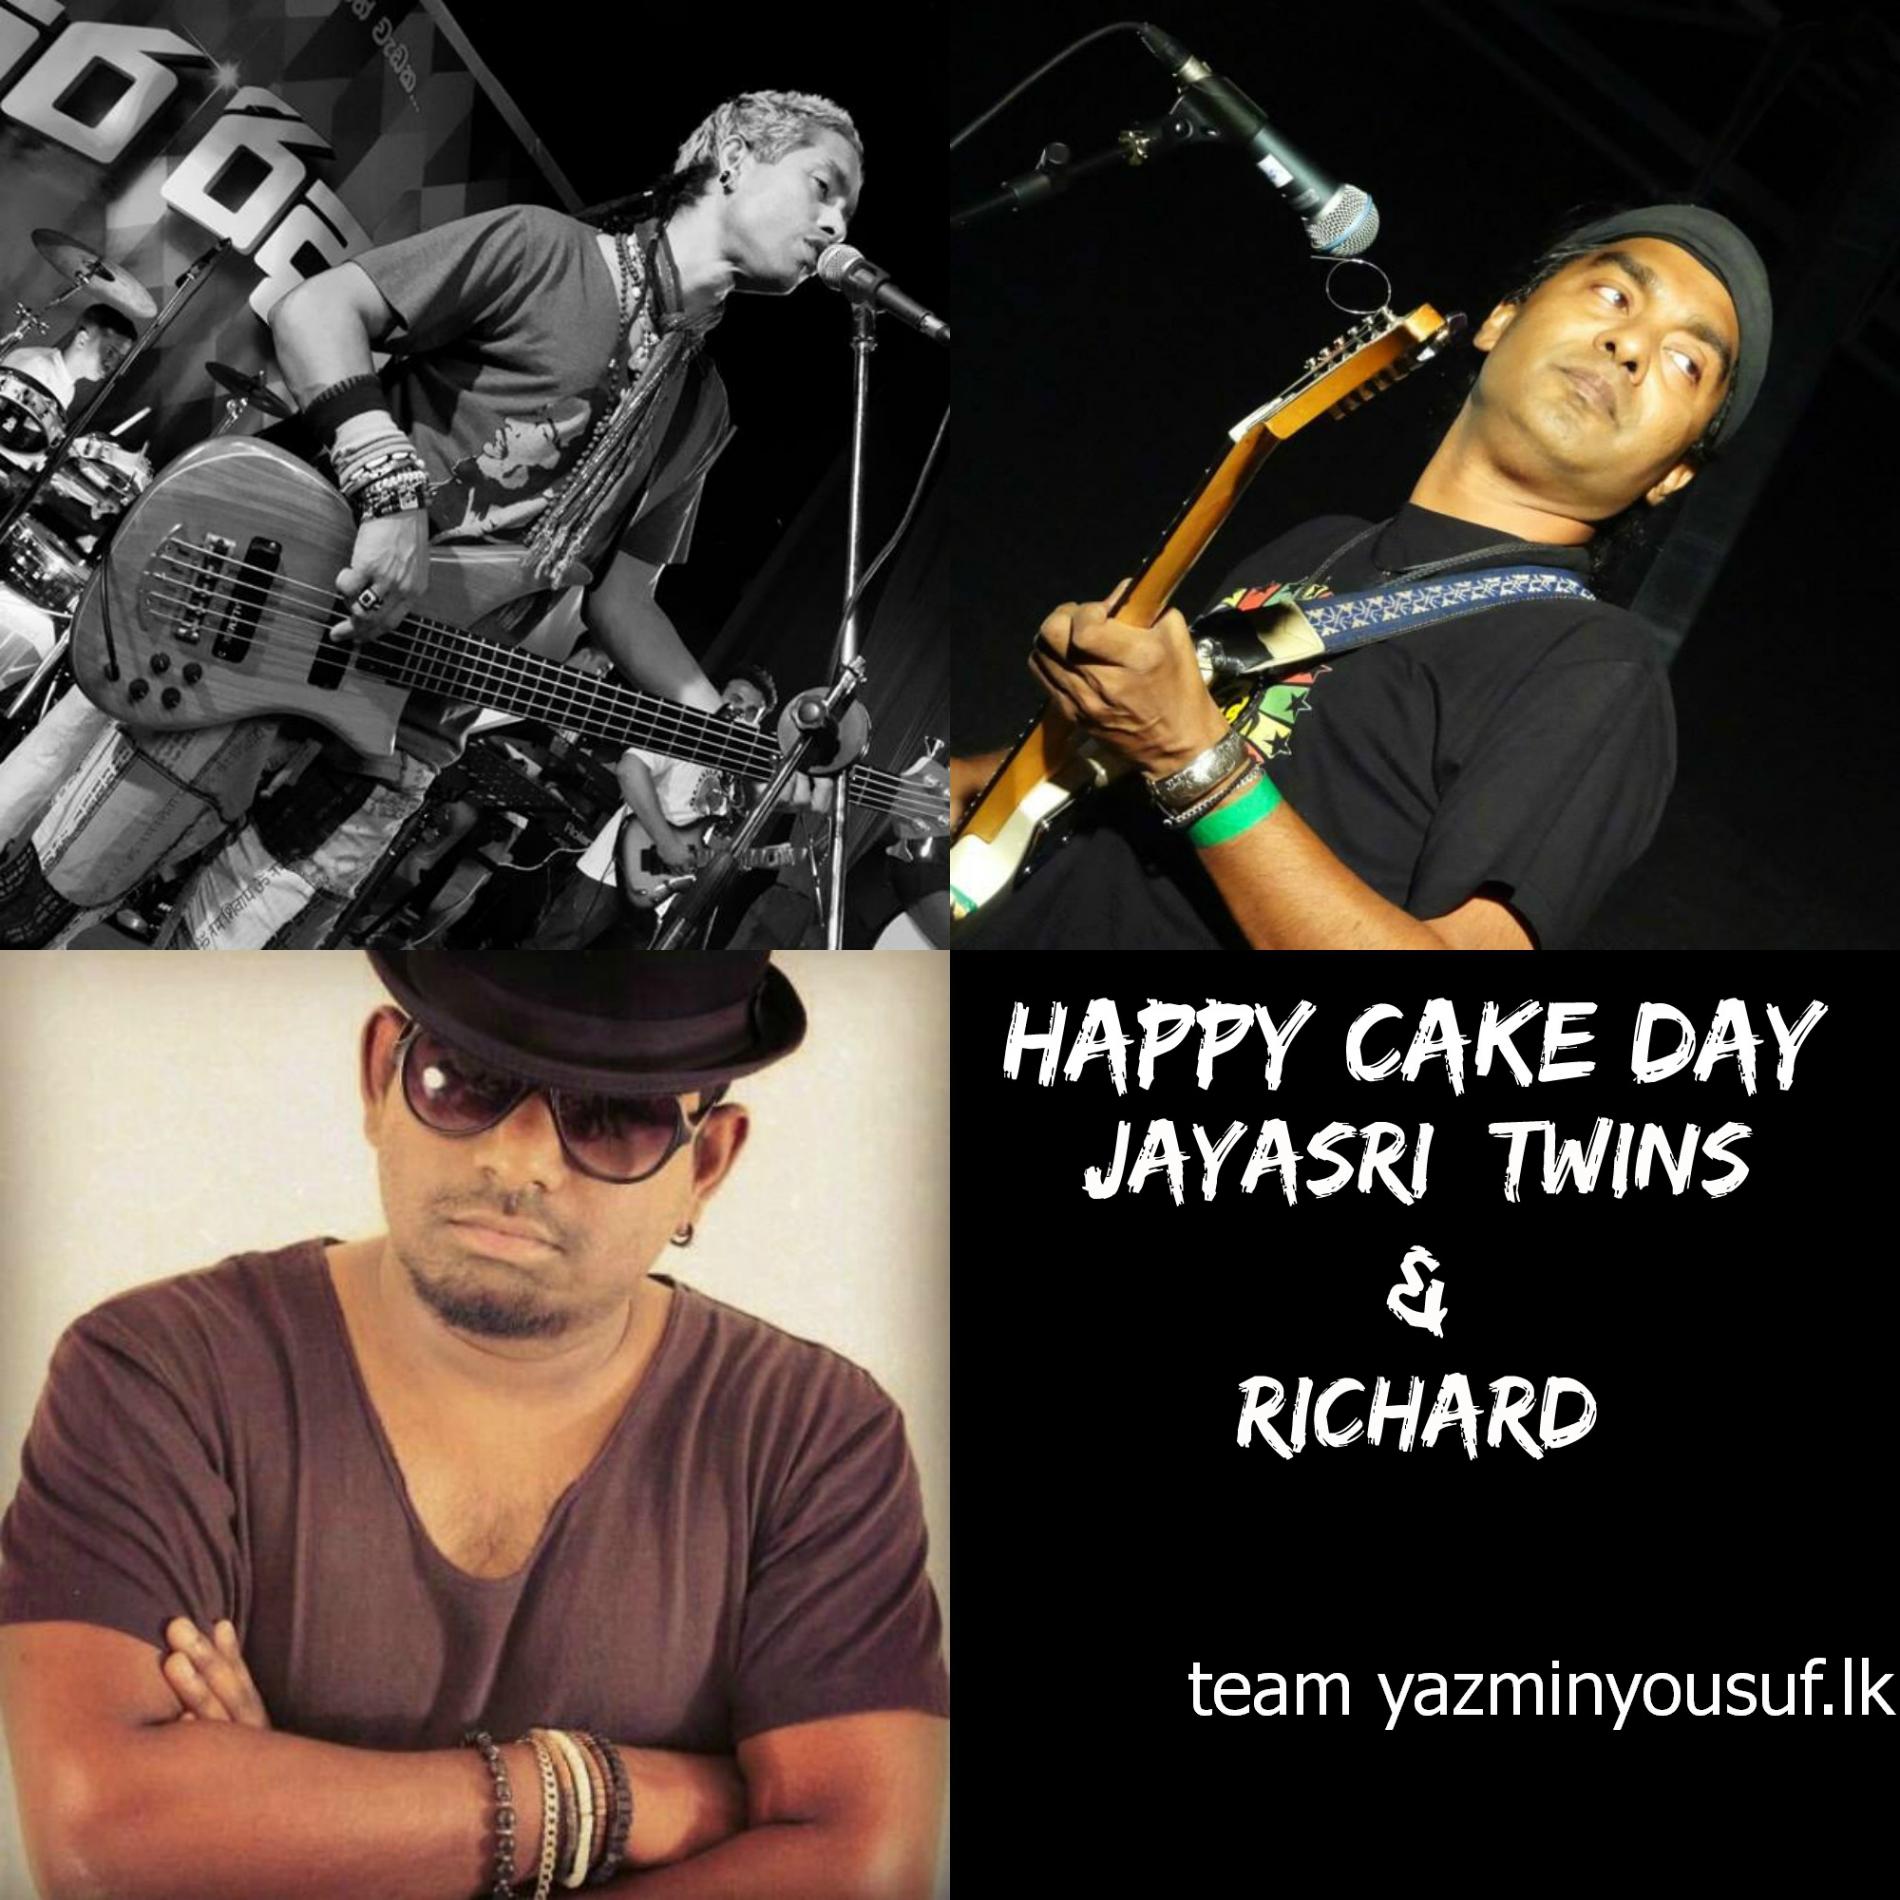 Happy Cake Day To The Jayasri Twins & Richard